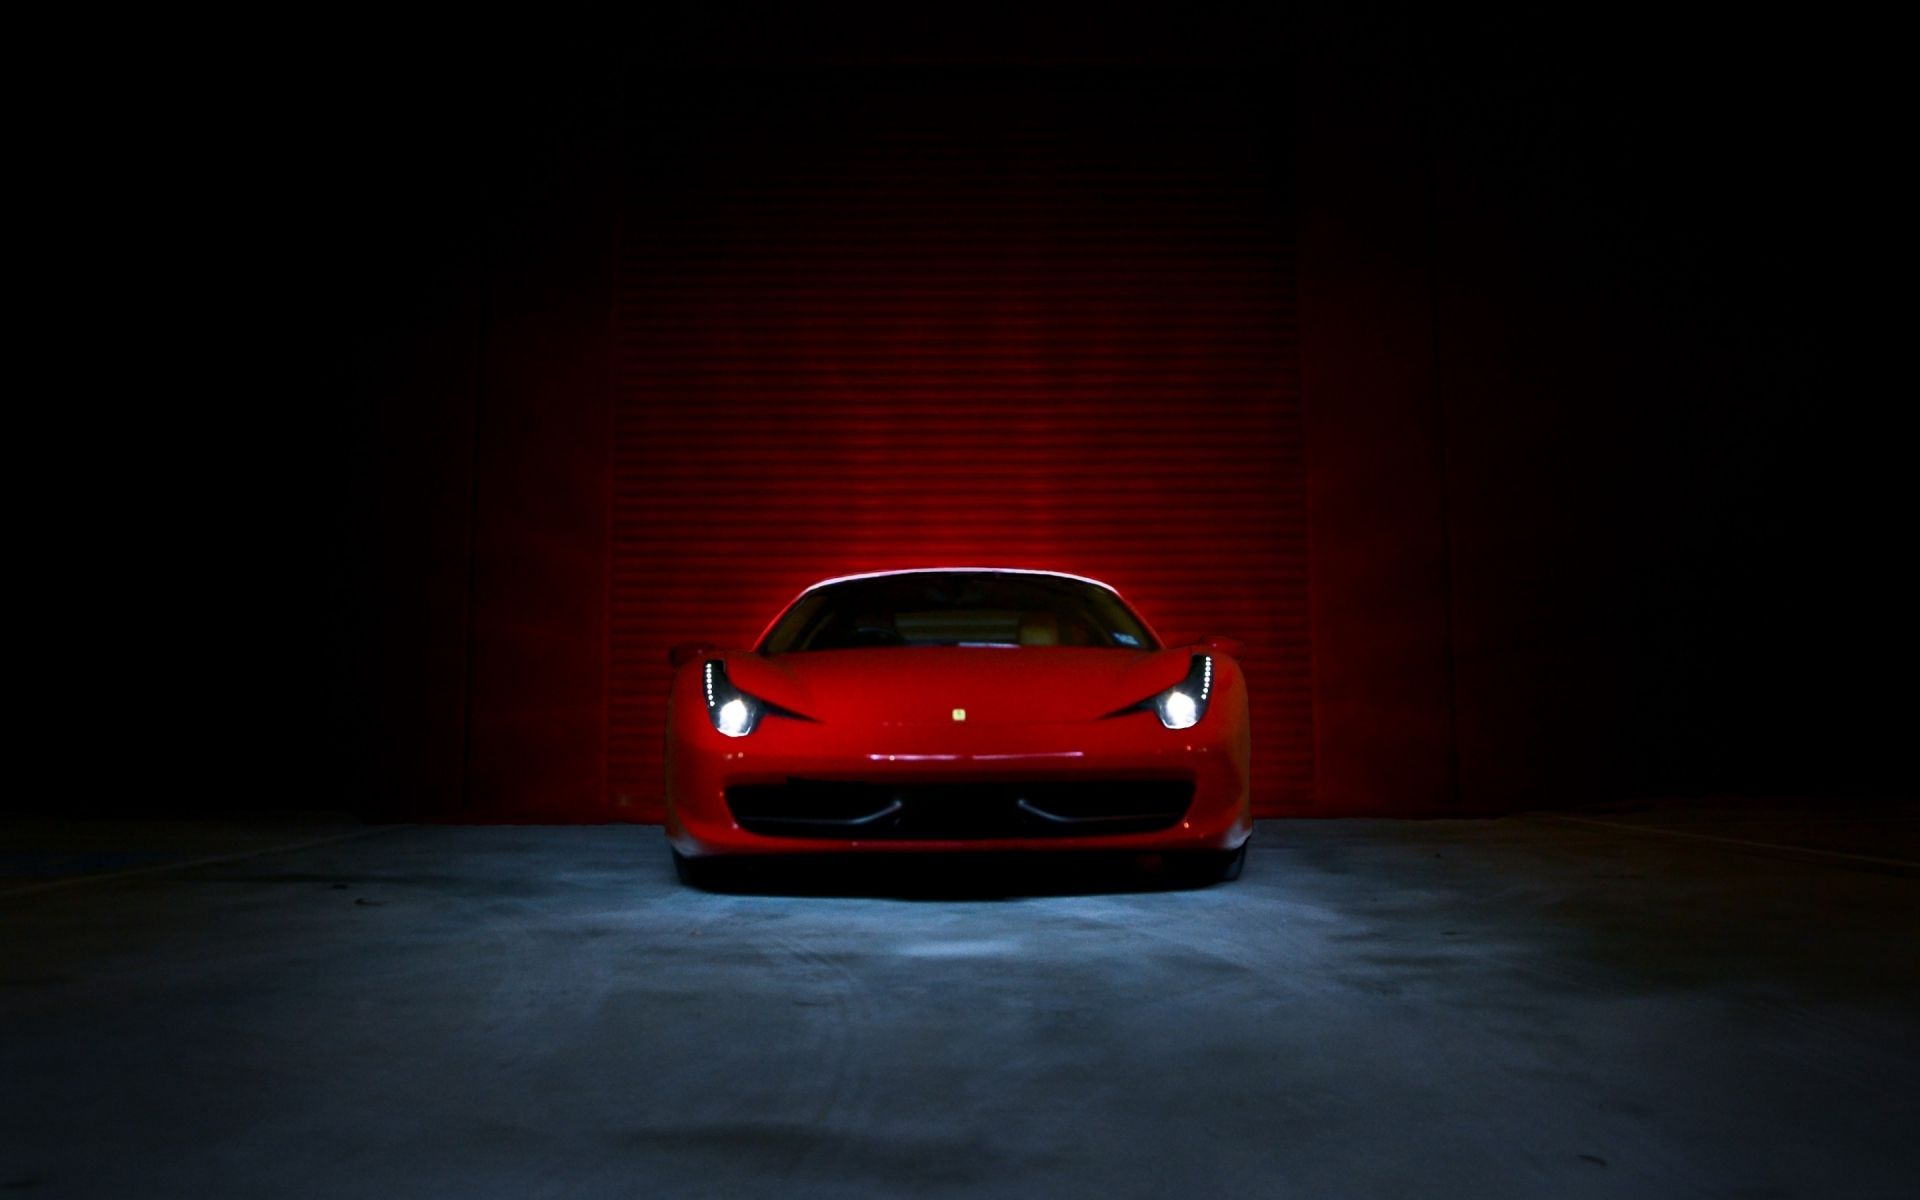 Ferrari 458 Wallpaper iPhone - image #374